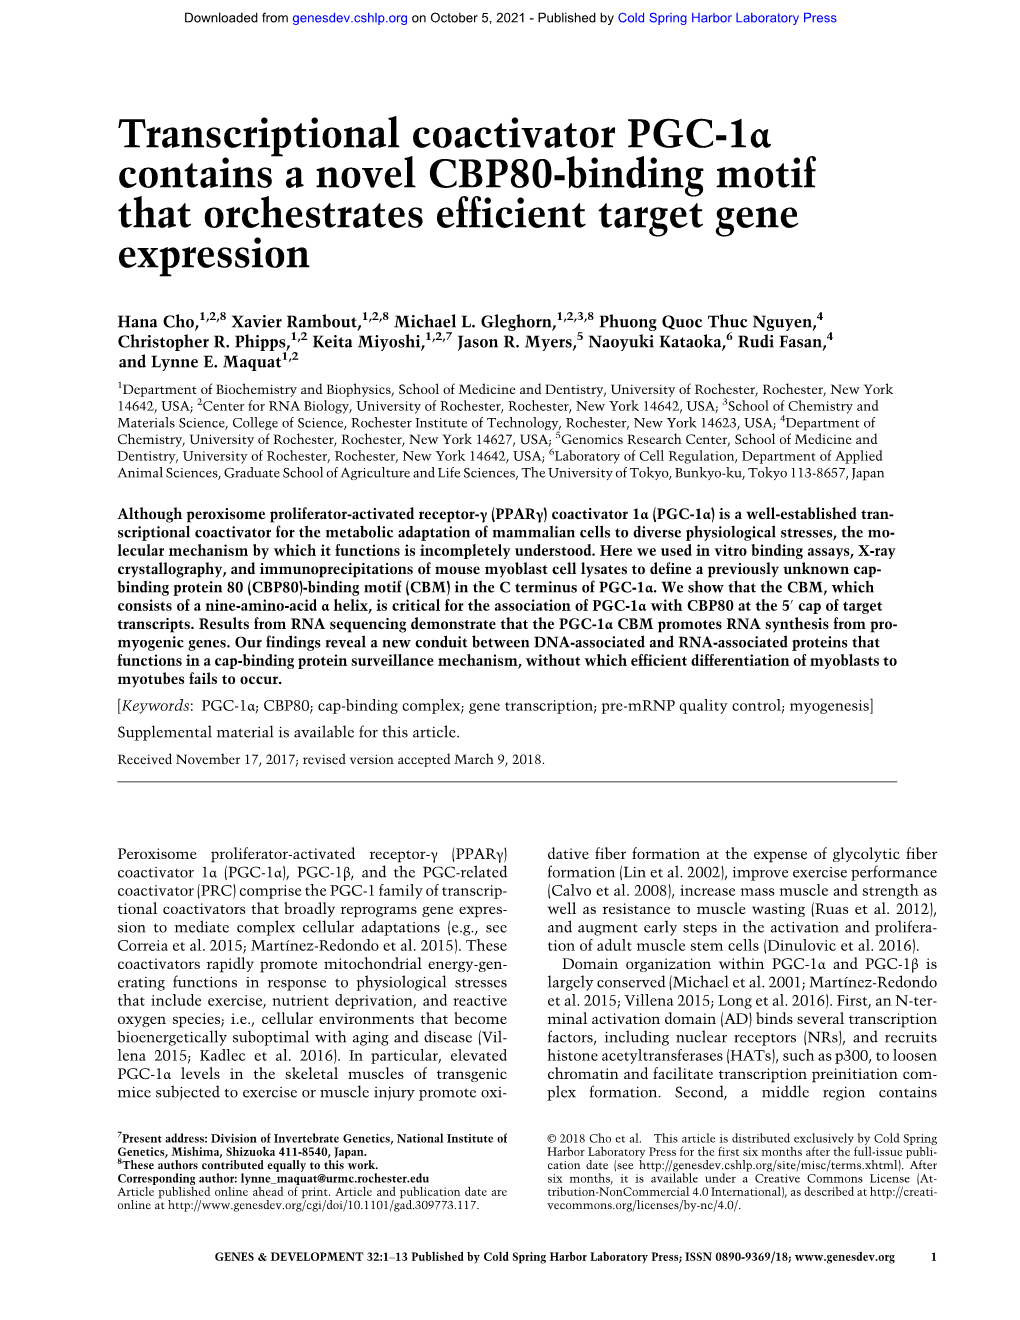 Transcriptional Coactivator PGC-1Α Contains a Novel CBP80-Binding Motif That Orchestrates Efficient Target Gene Expression